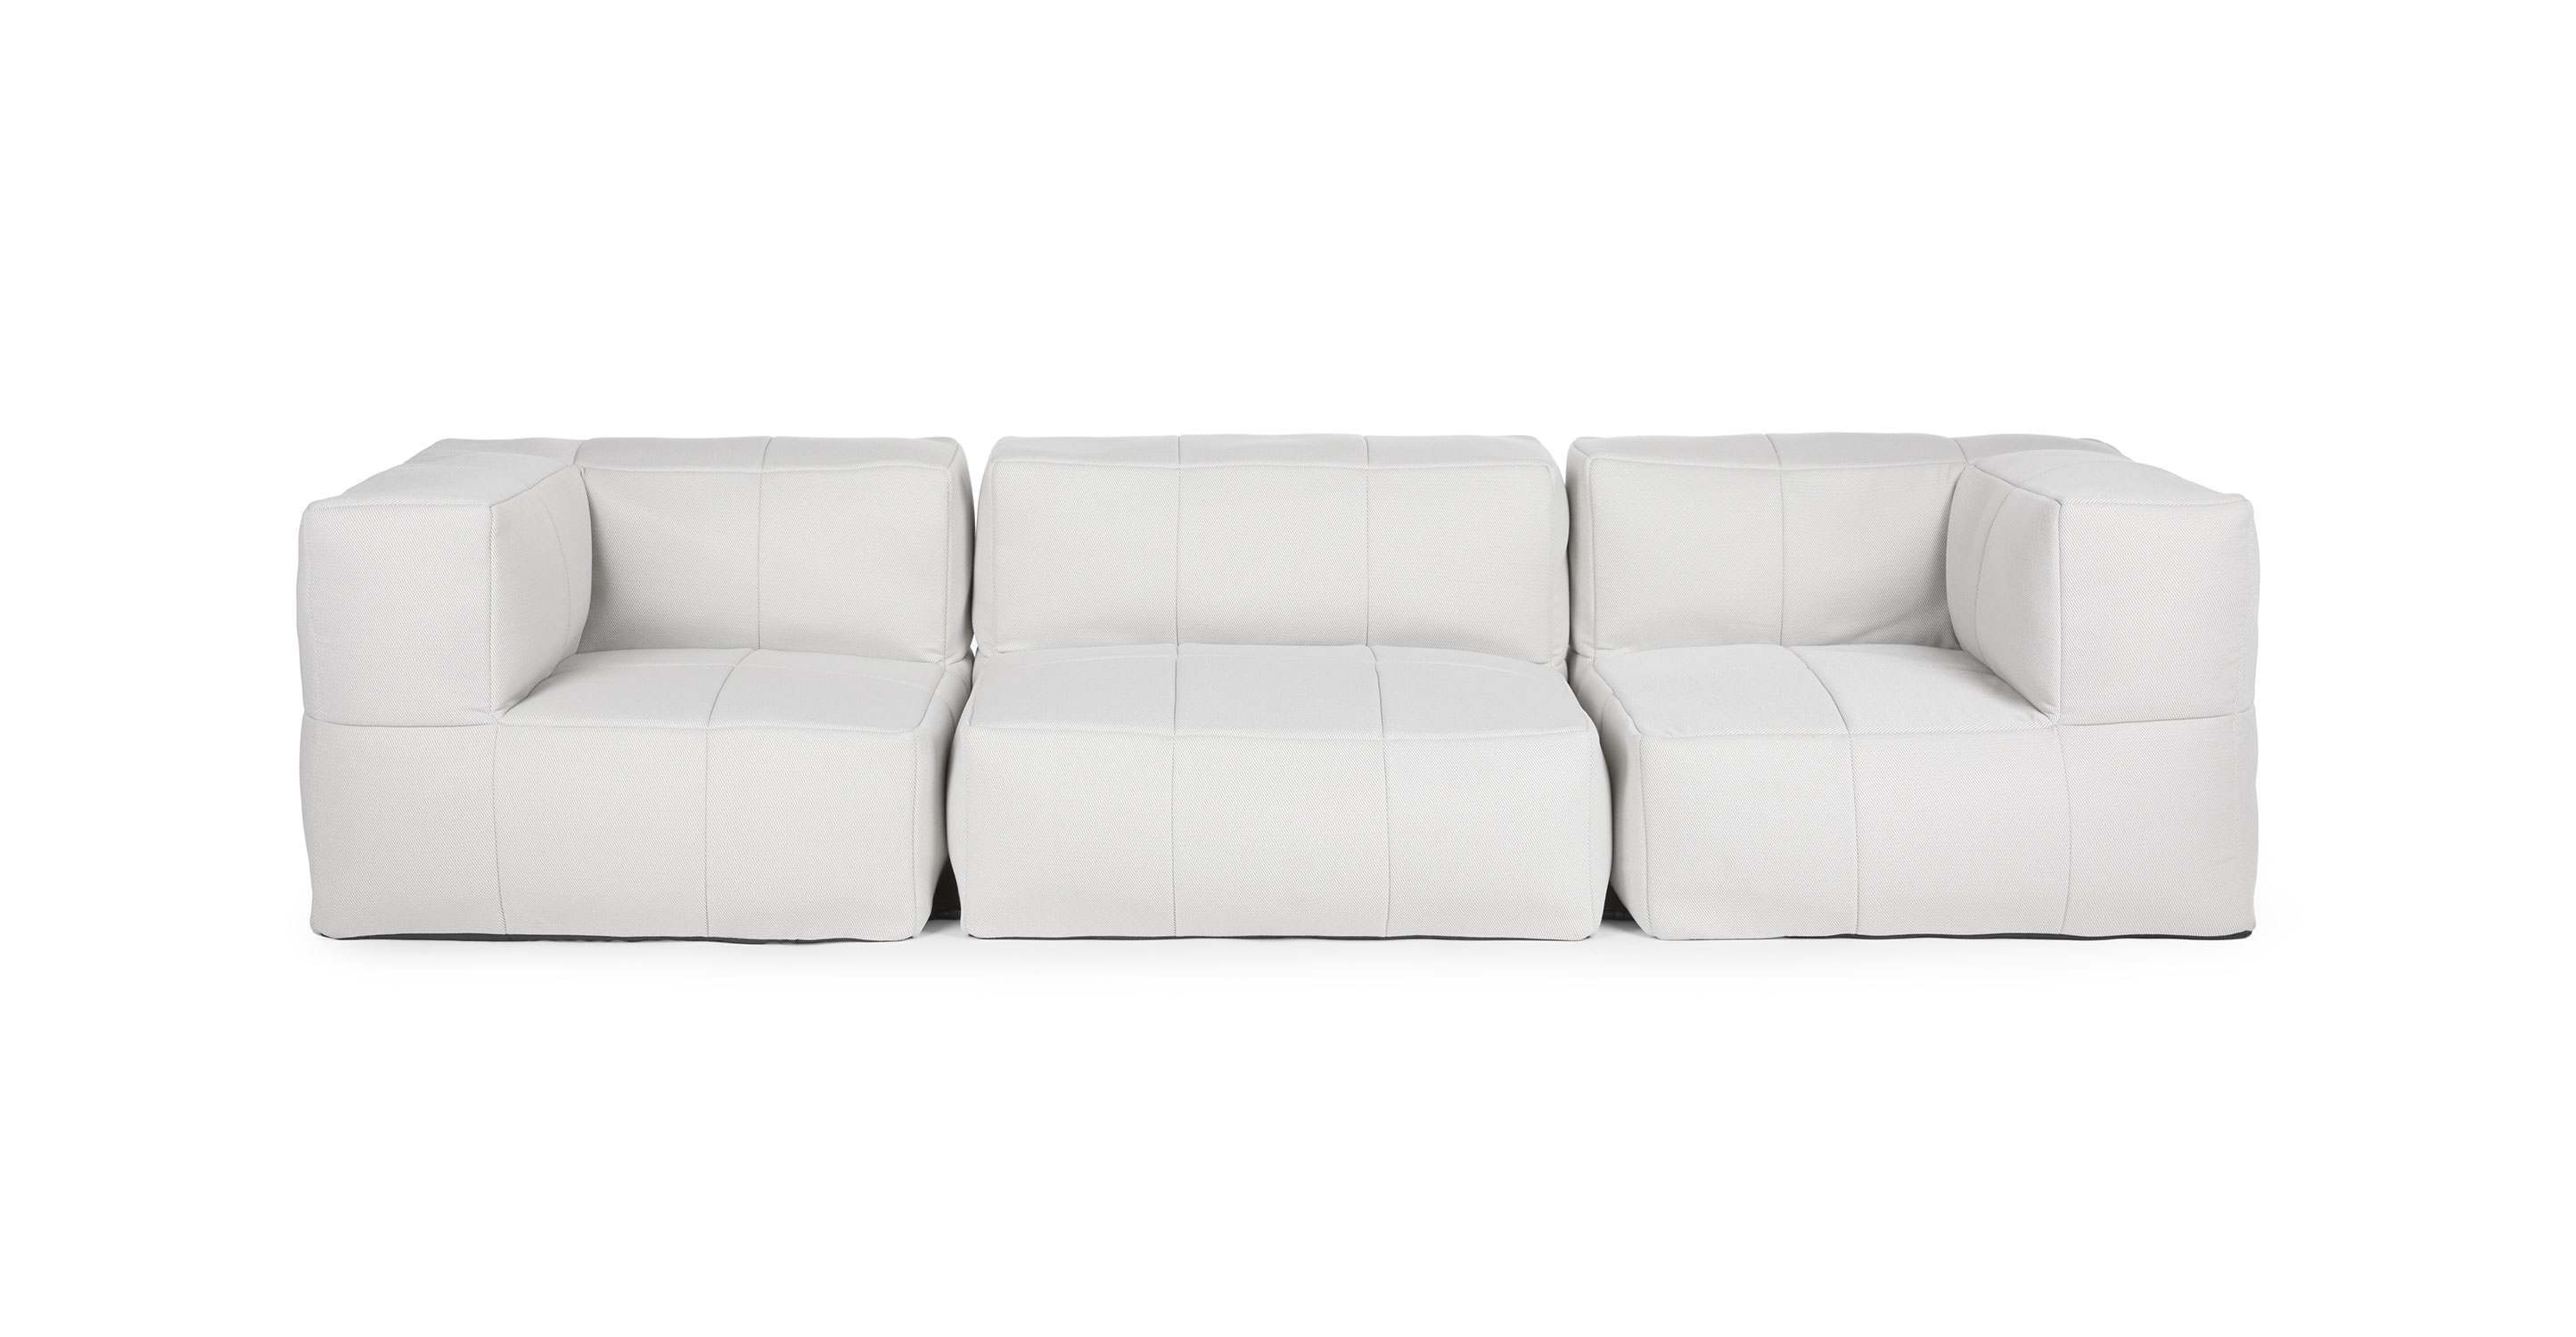 Corvos Gray Fabric Modular Sofa | Article